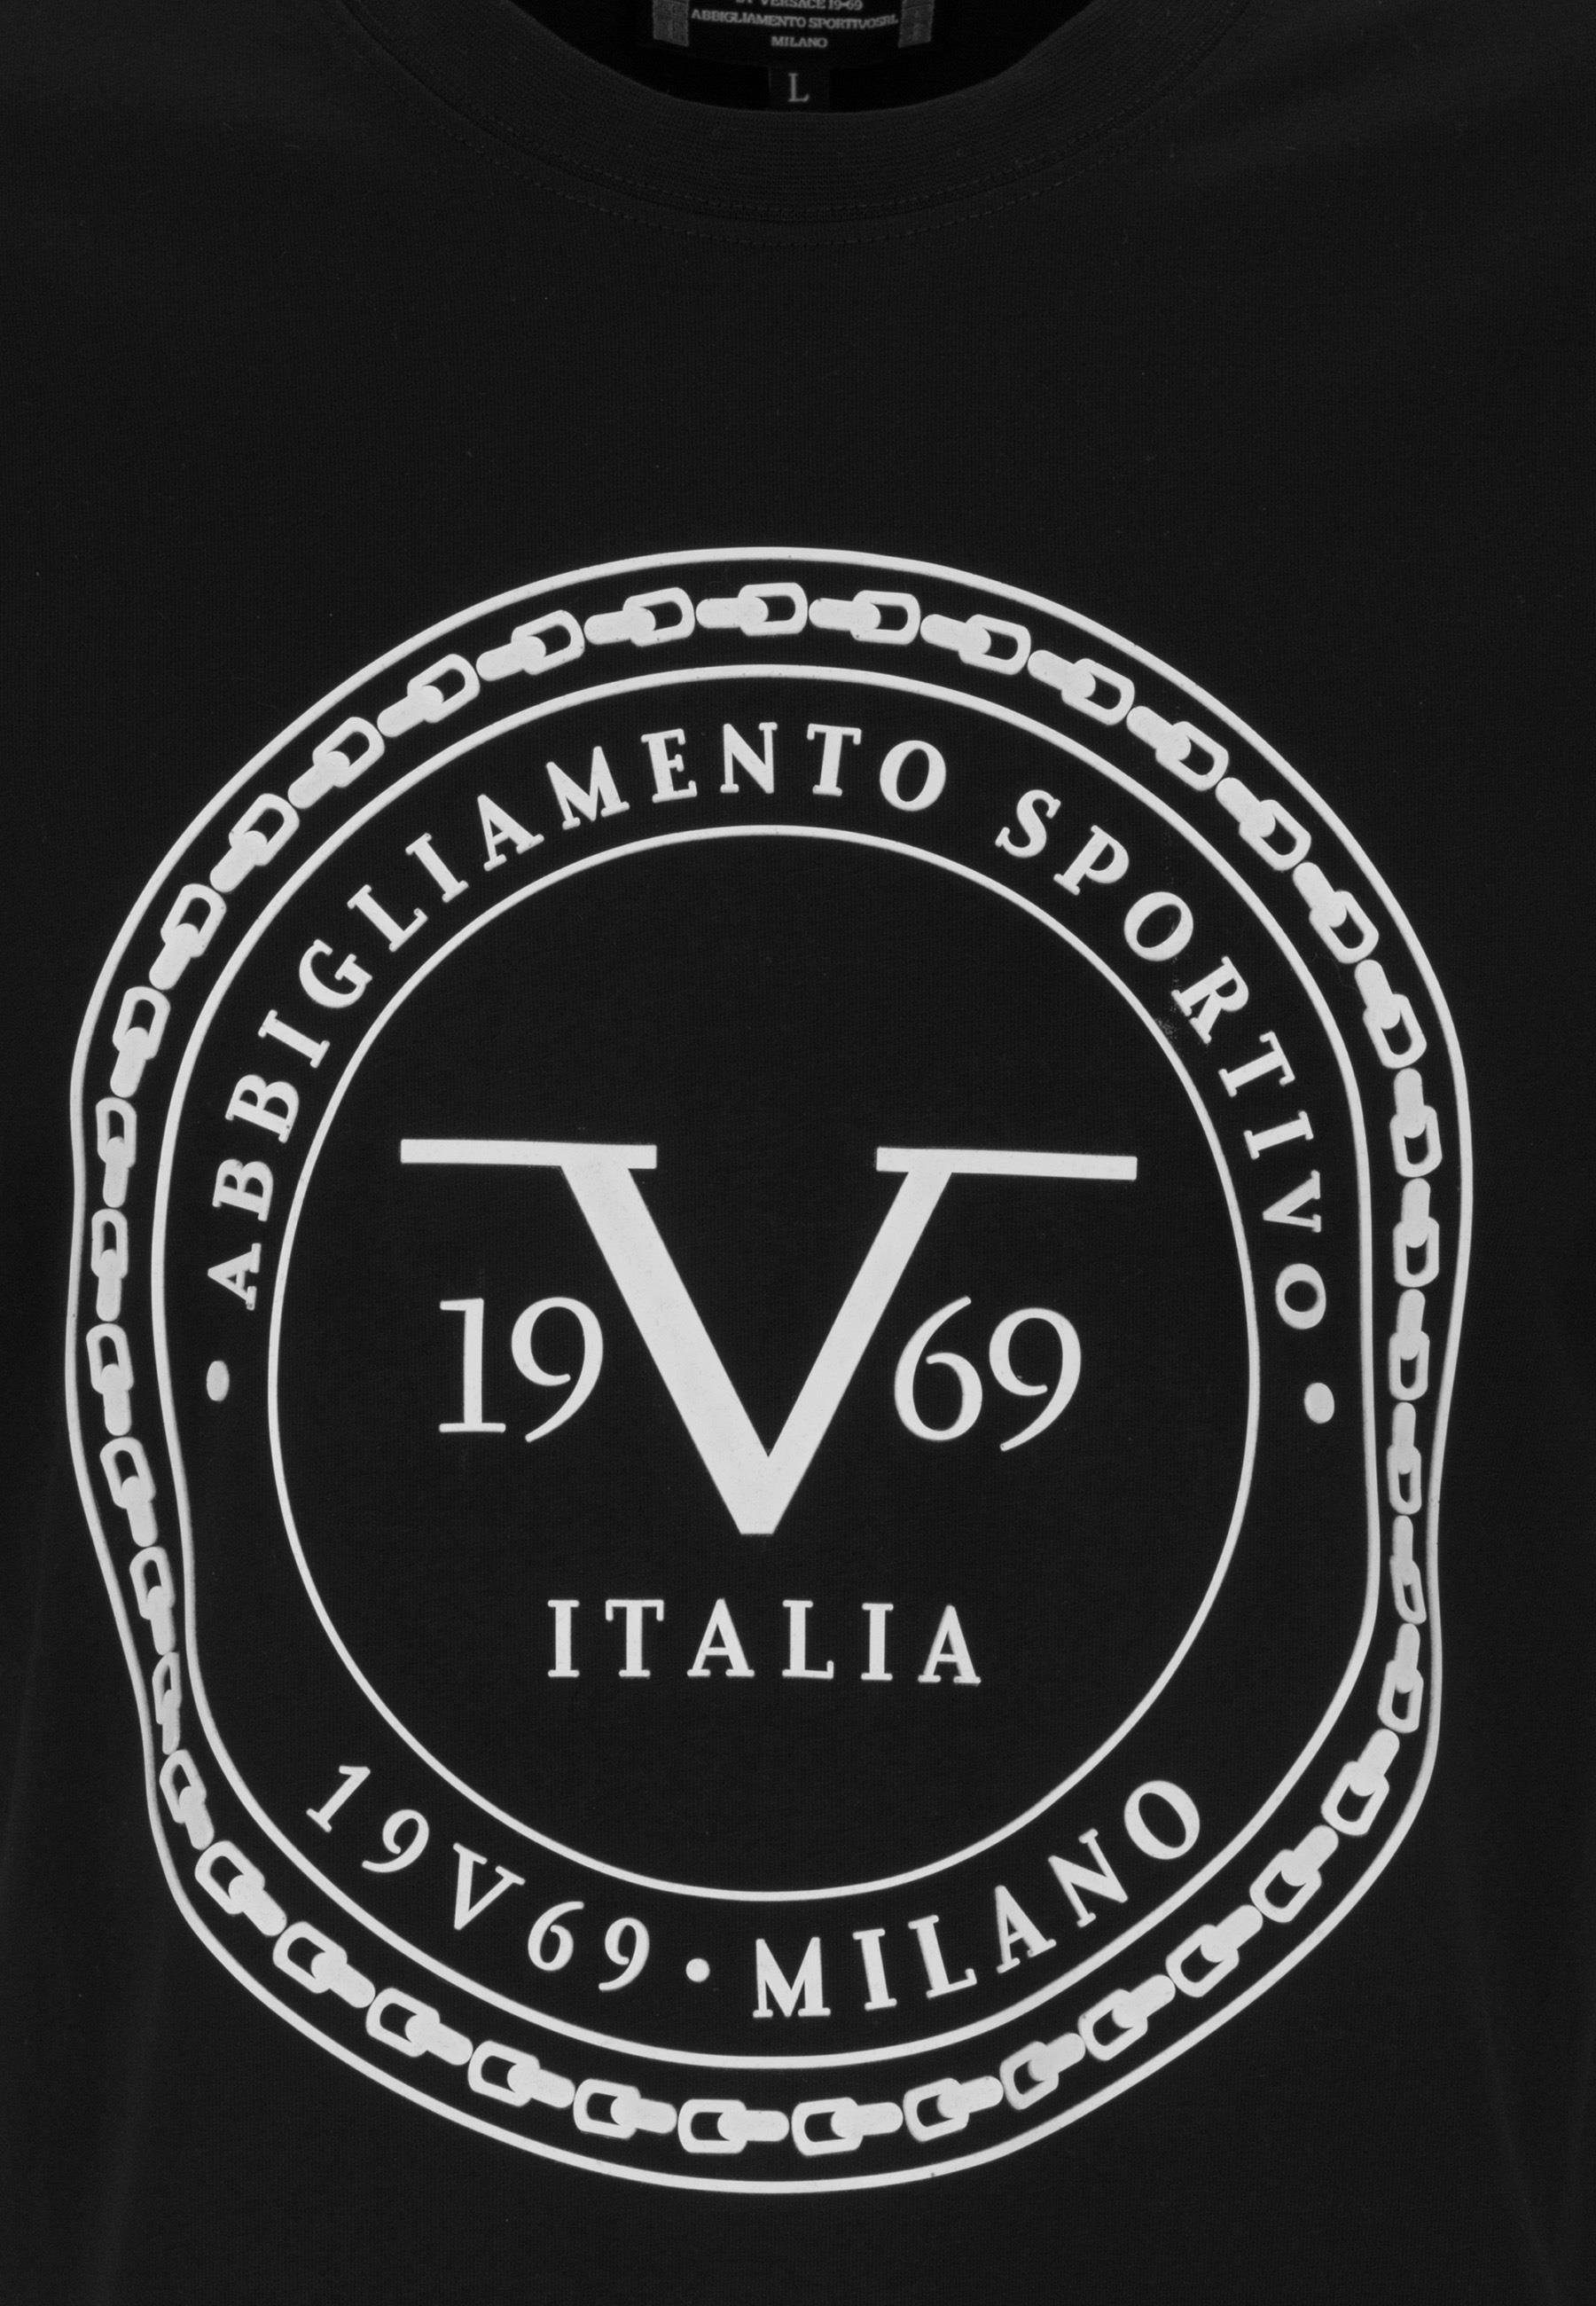 T-Shirt Felix Italia BLACK 19V69 Versace T-Shirt by